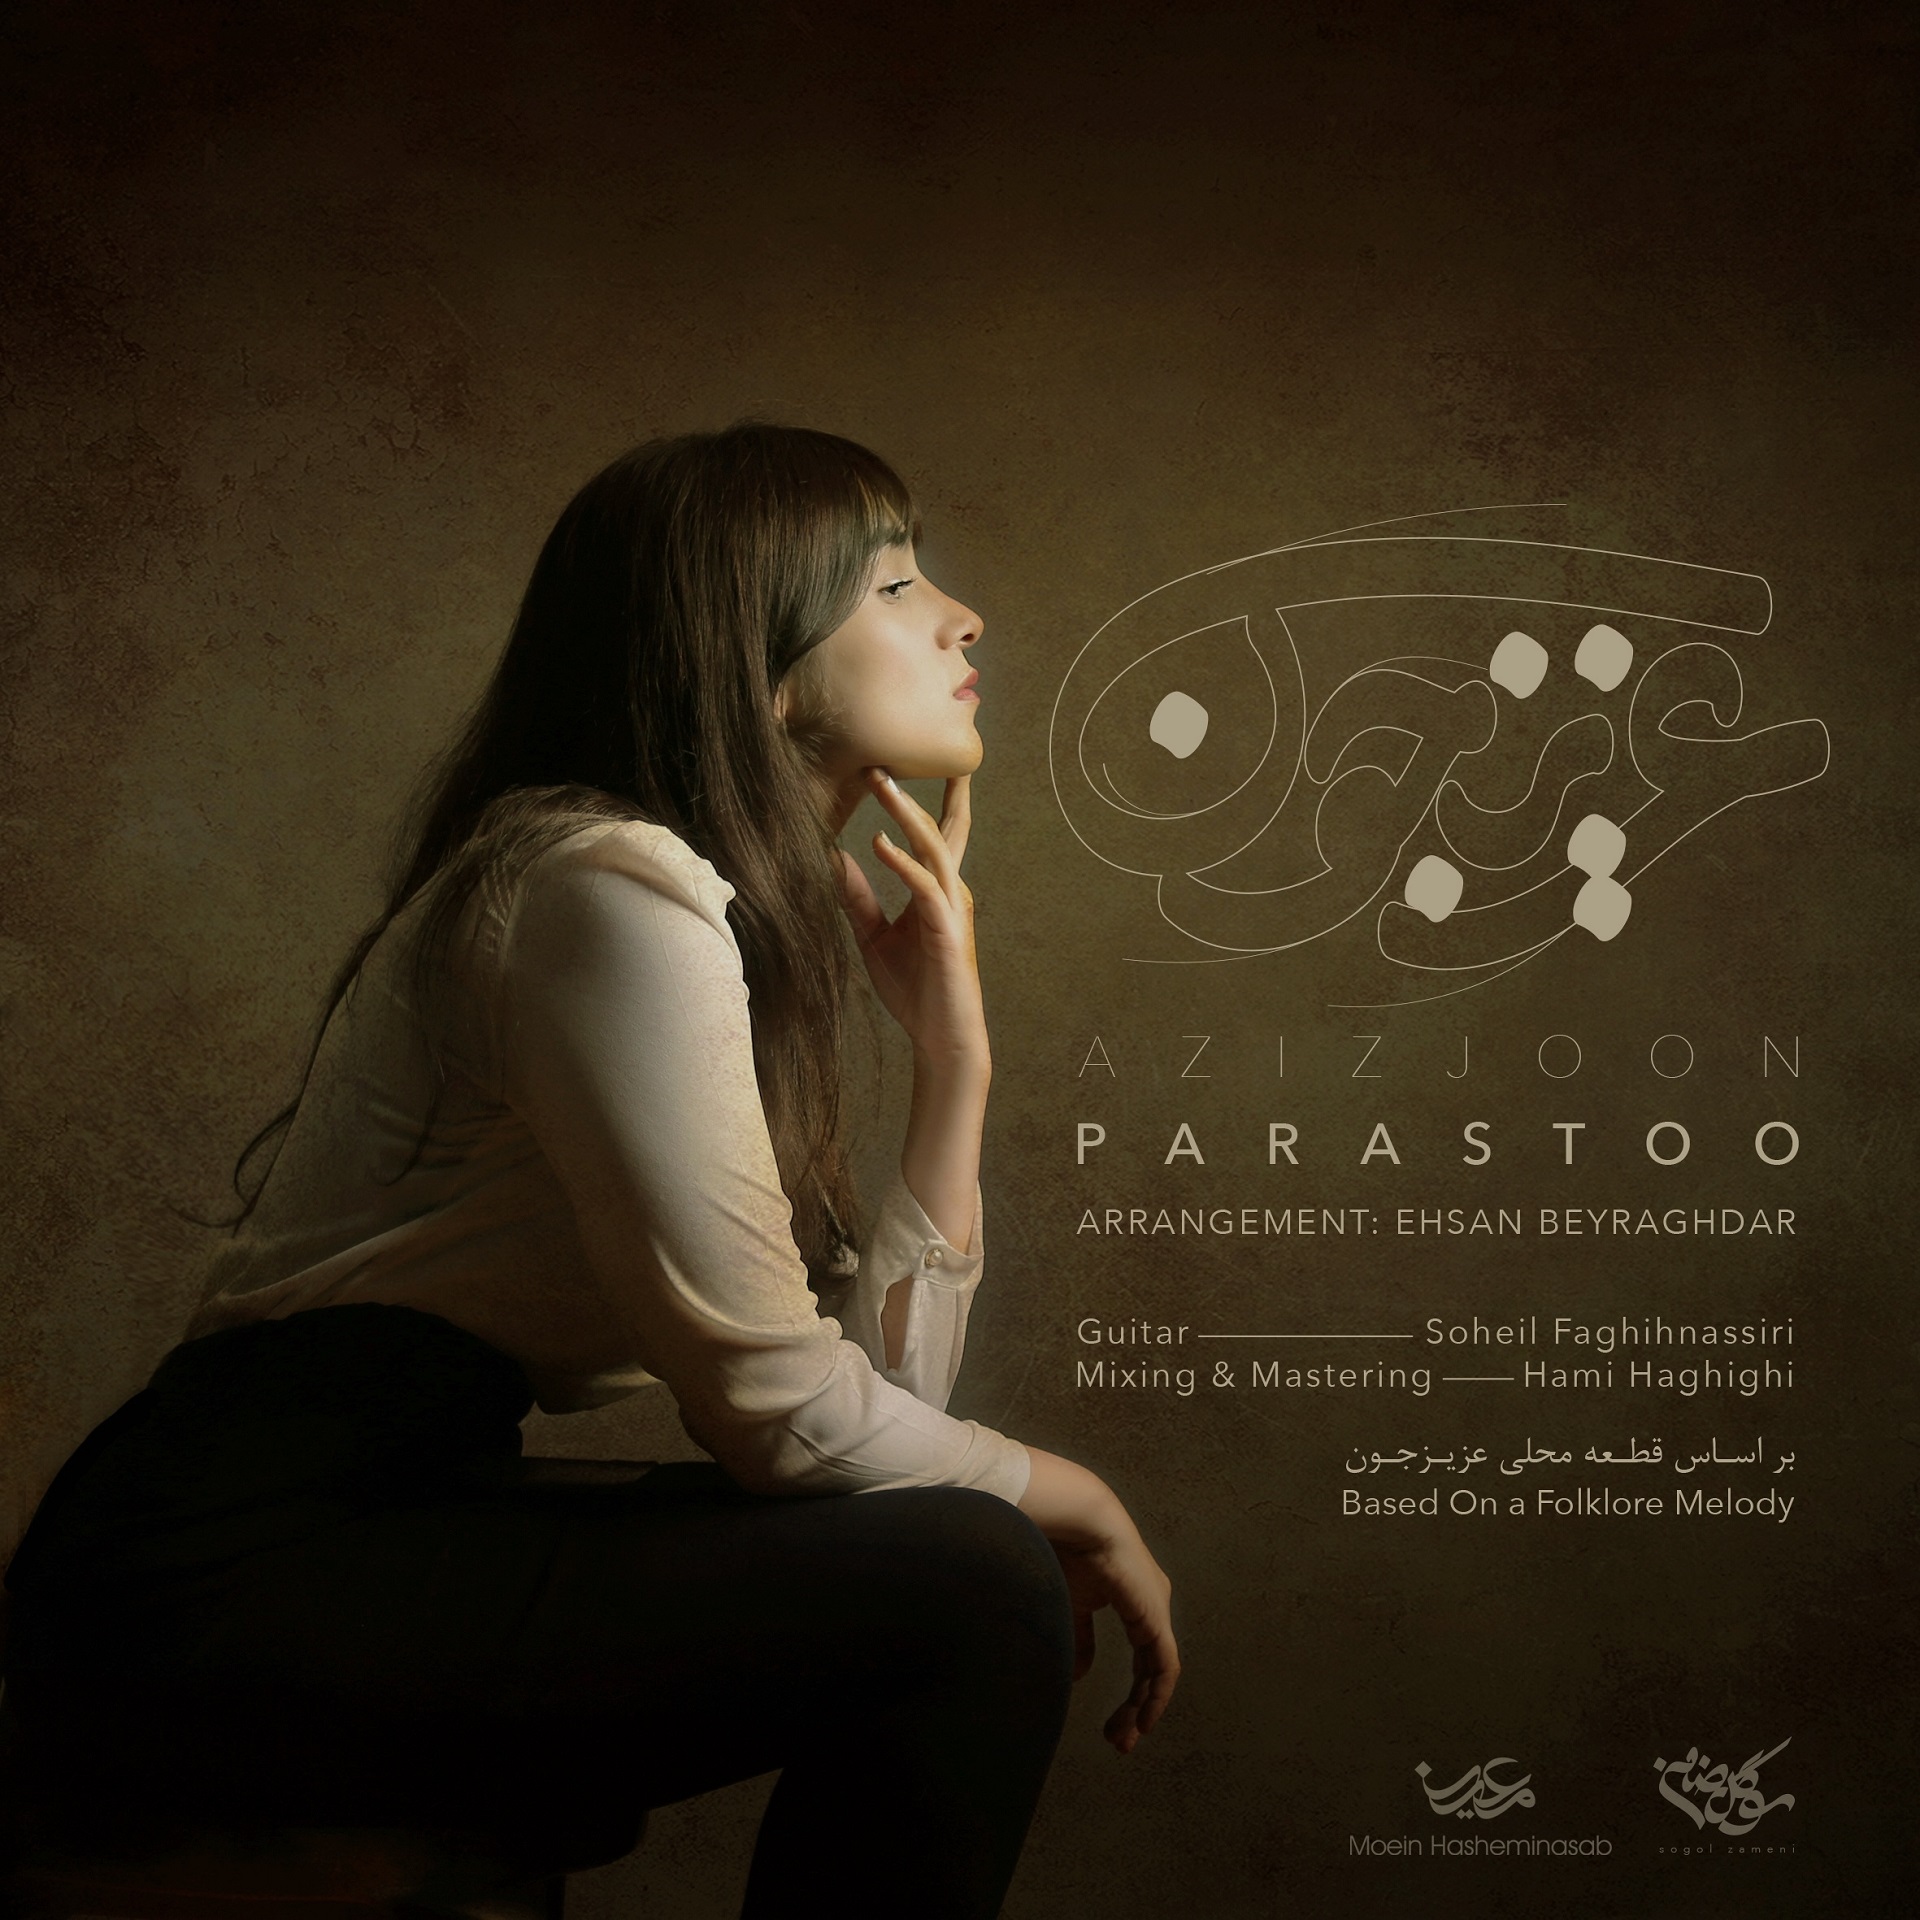  دانلود آهنگ جدید پرستو - عزیز جون | Download New Music By Parastoo - Aziz Joon